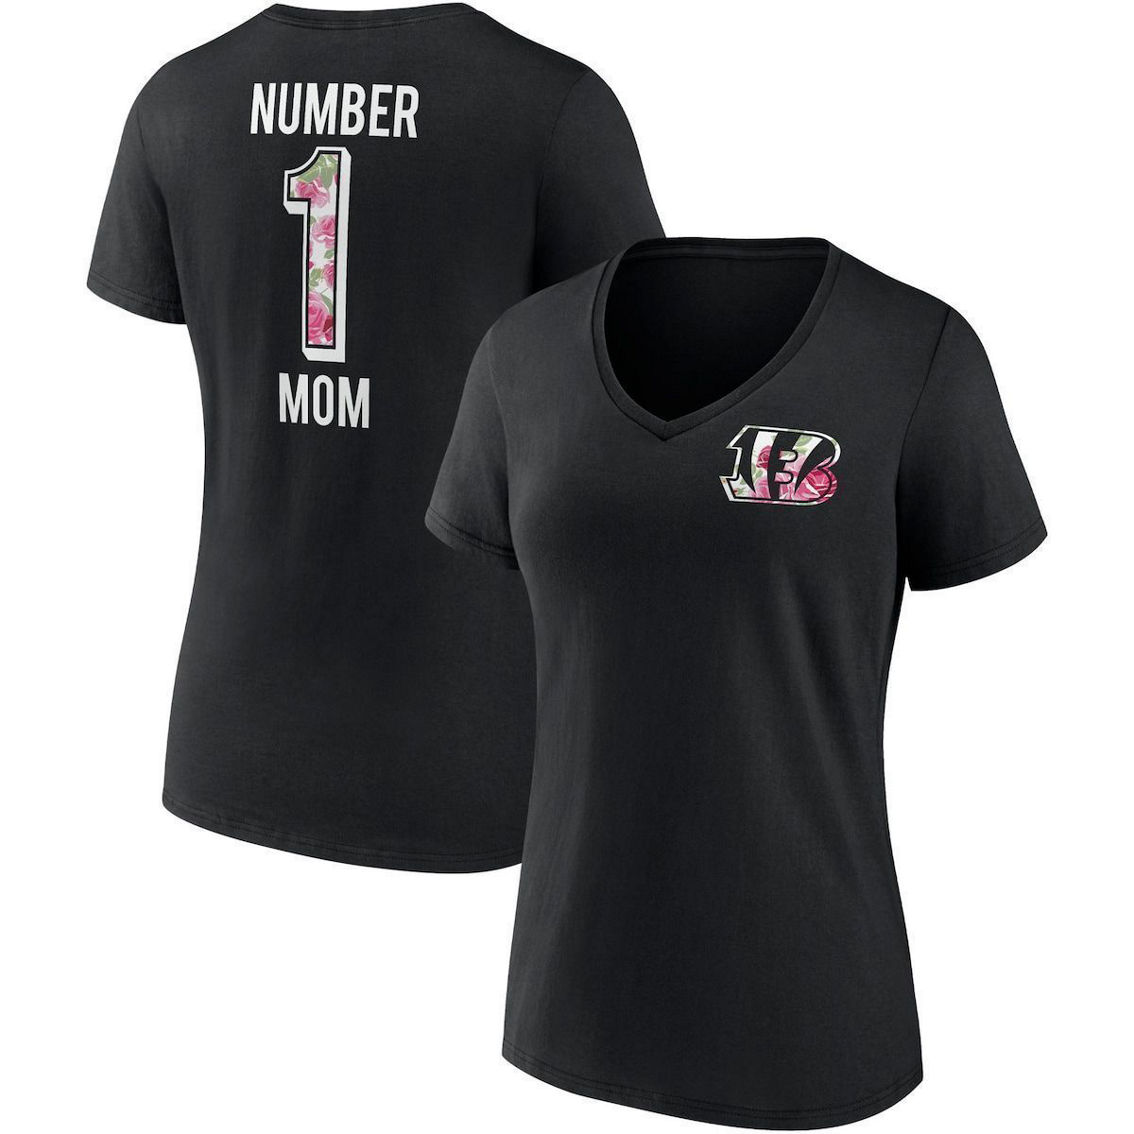 Fanatics Branded Women's Black Cincinnati Bengals Team Mother's Day V-Neck T-Shirt - Image 2 of 4